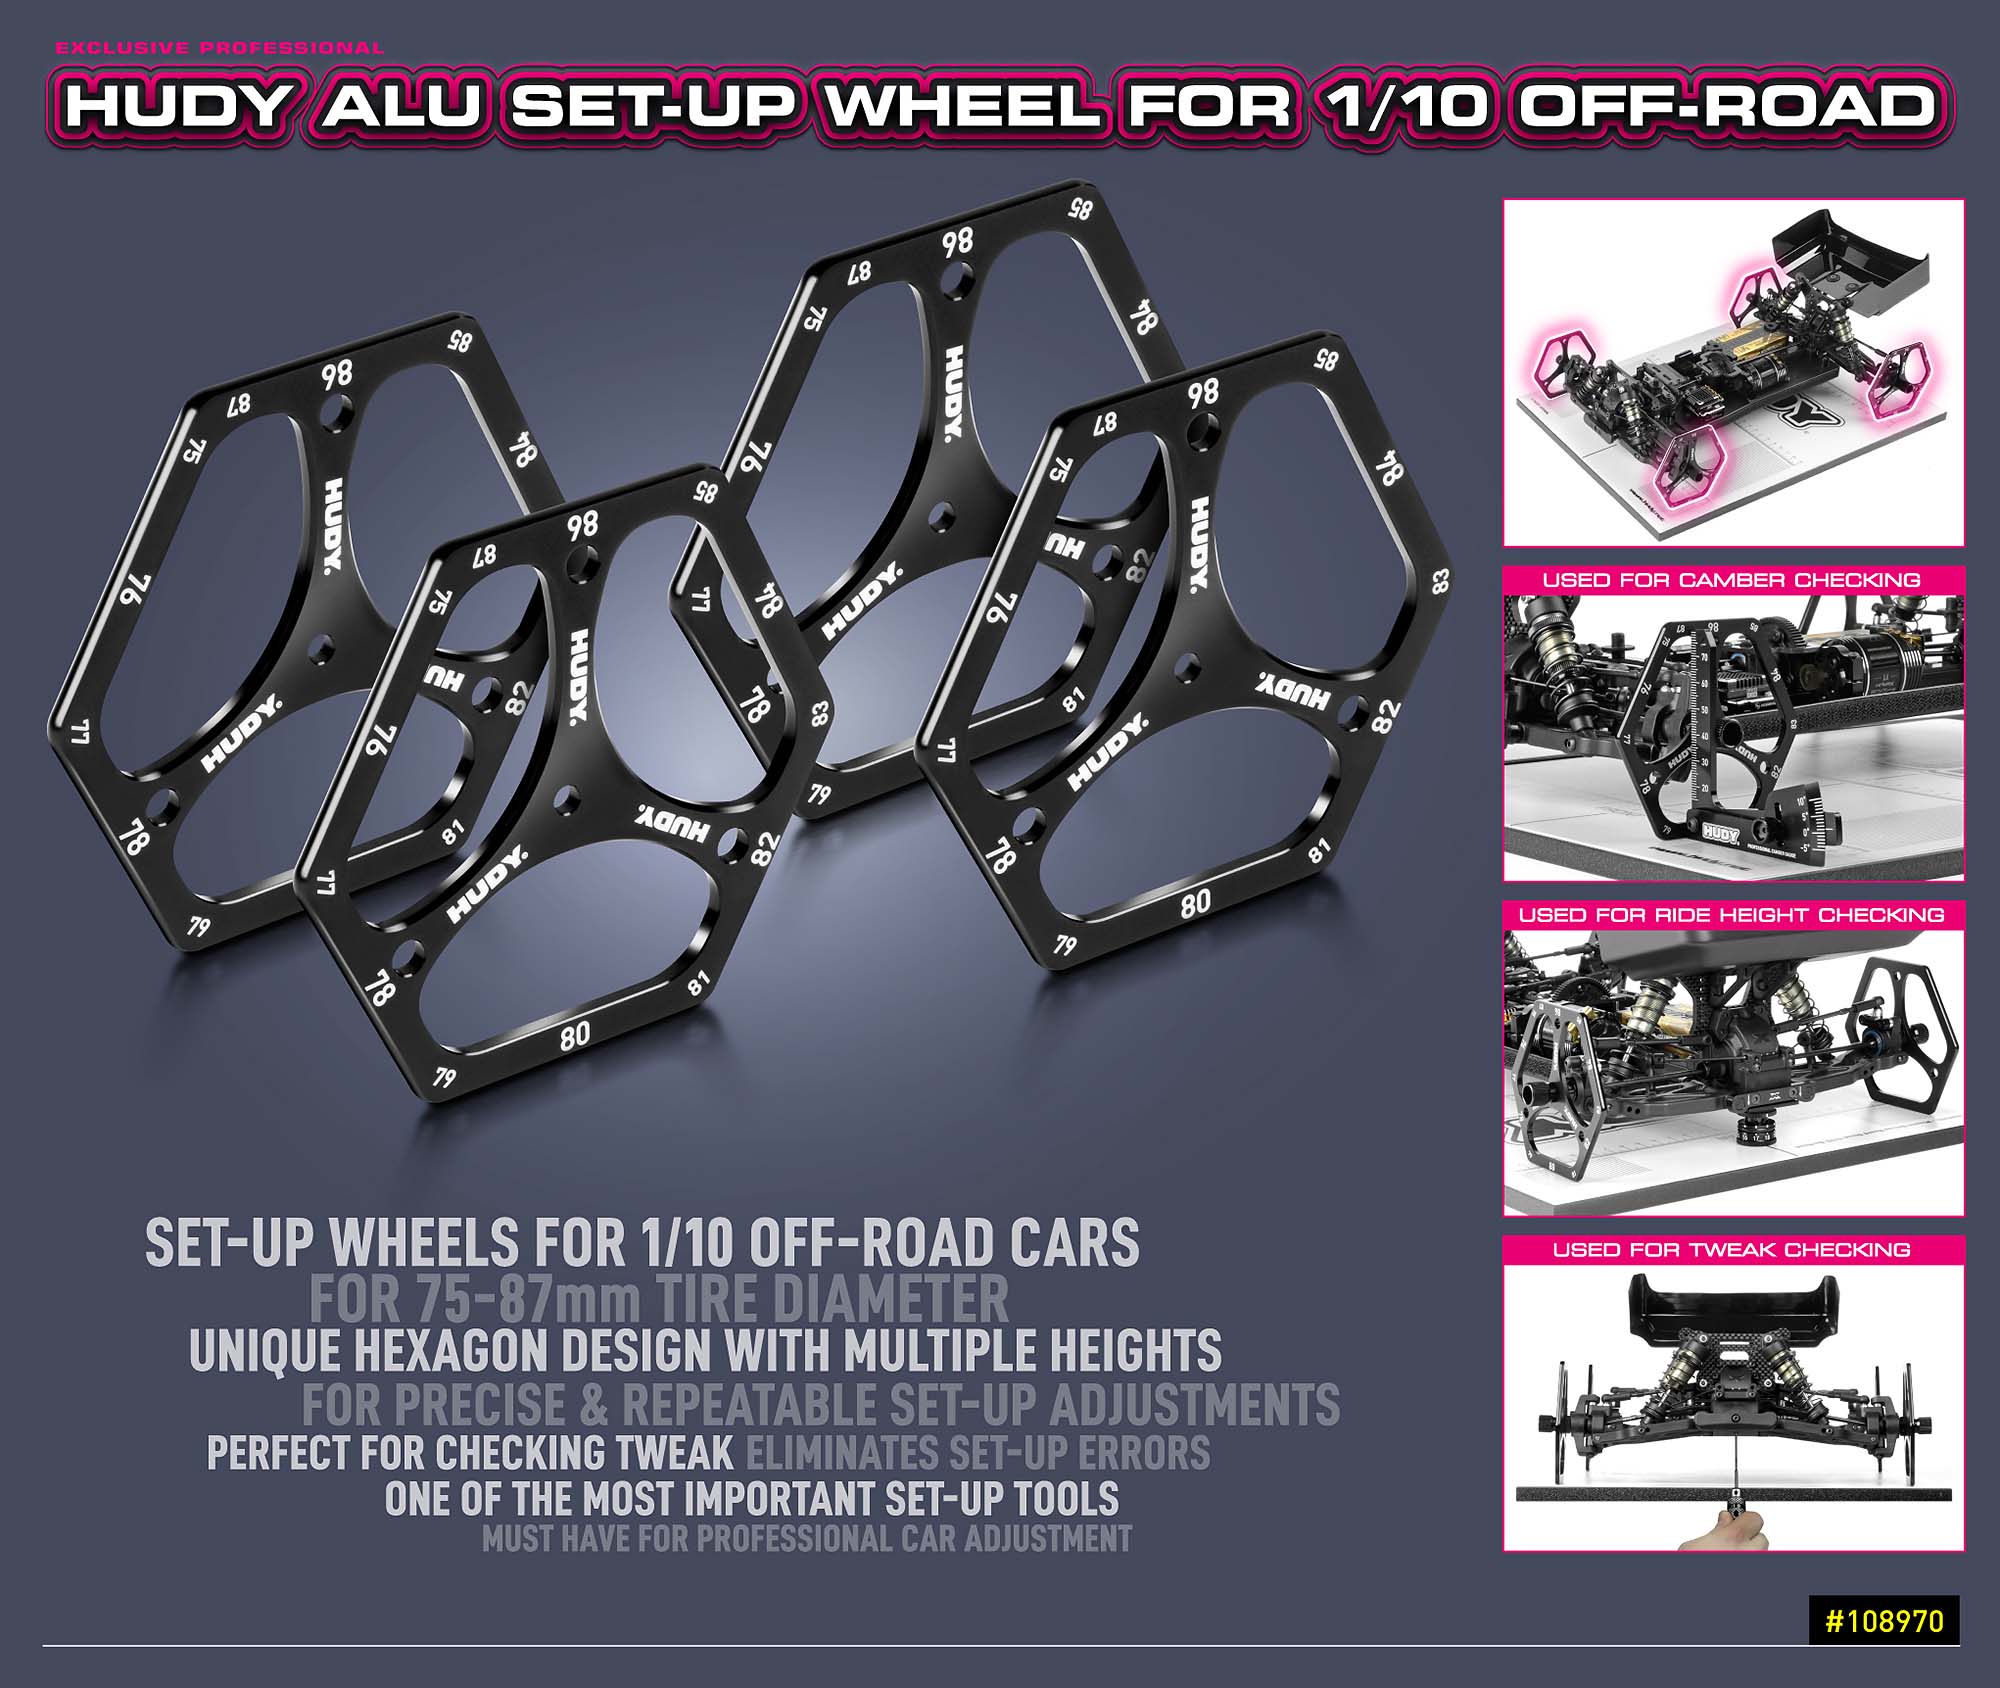 New HUDY Alu Set-Up Wheel for 1/10 Off-Road